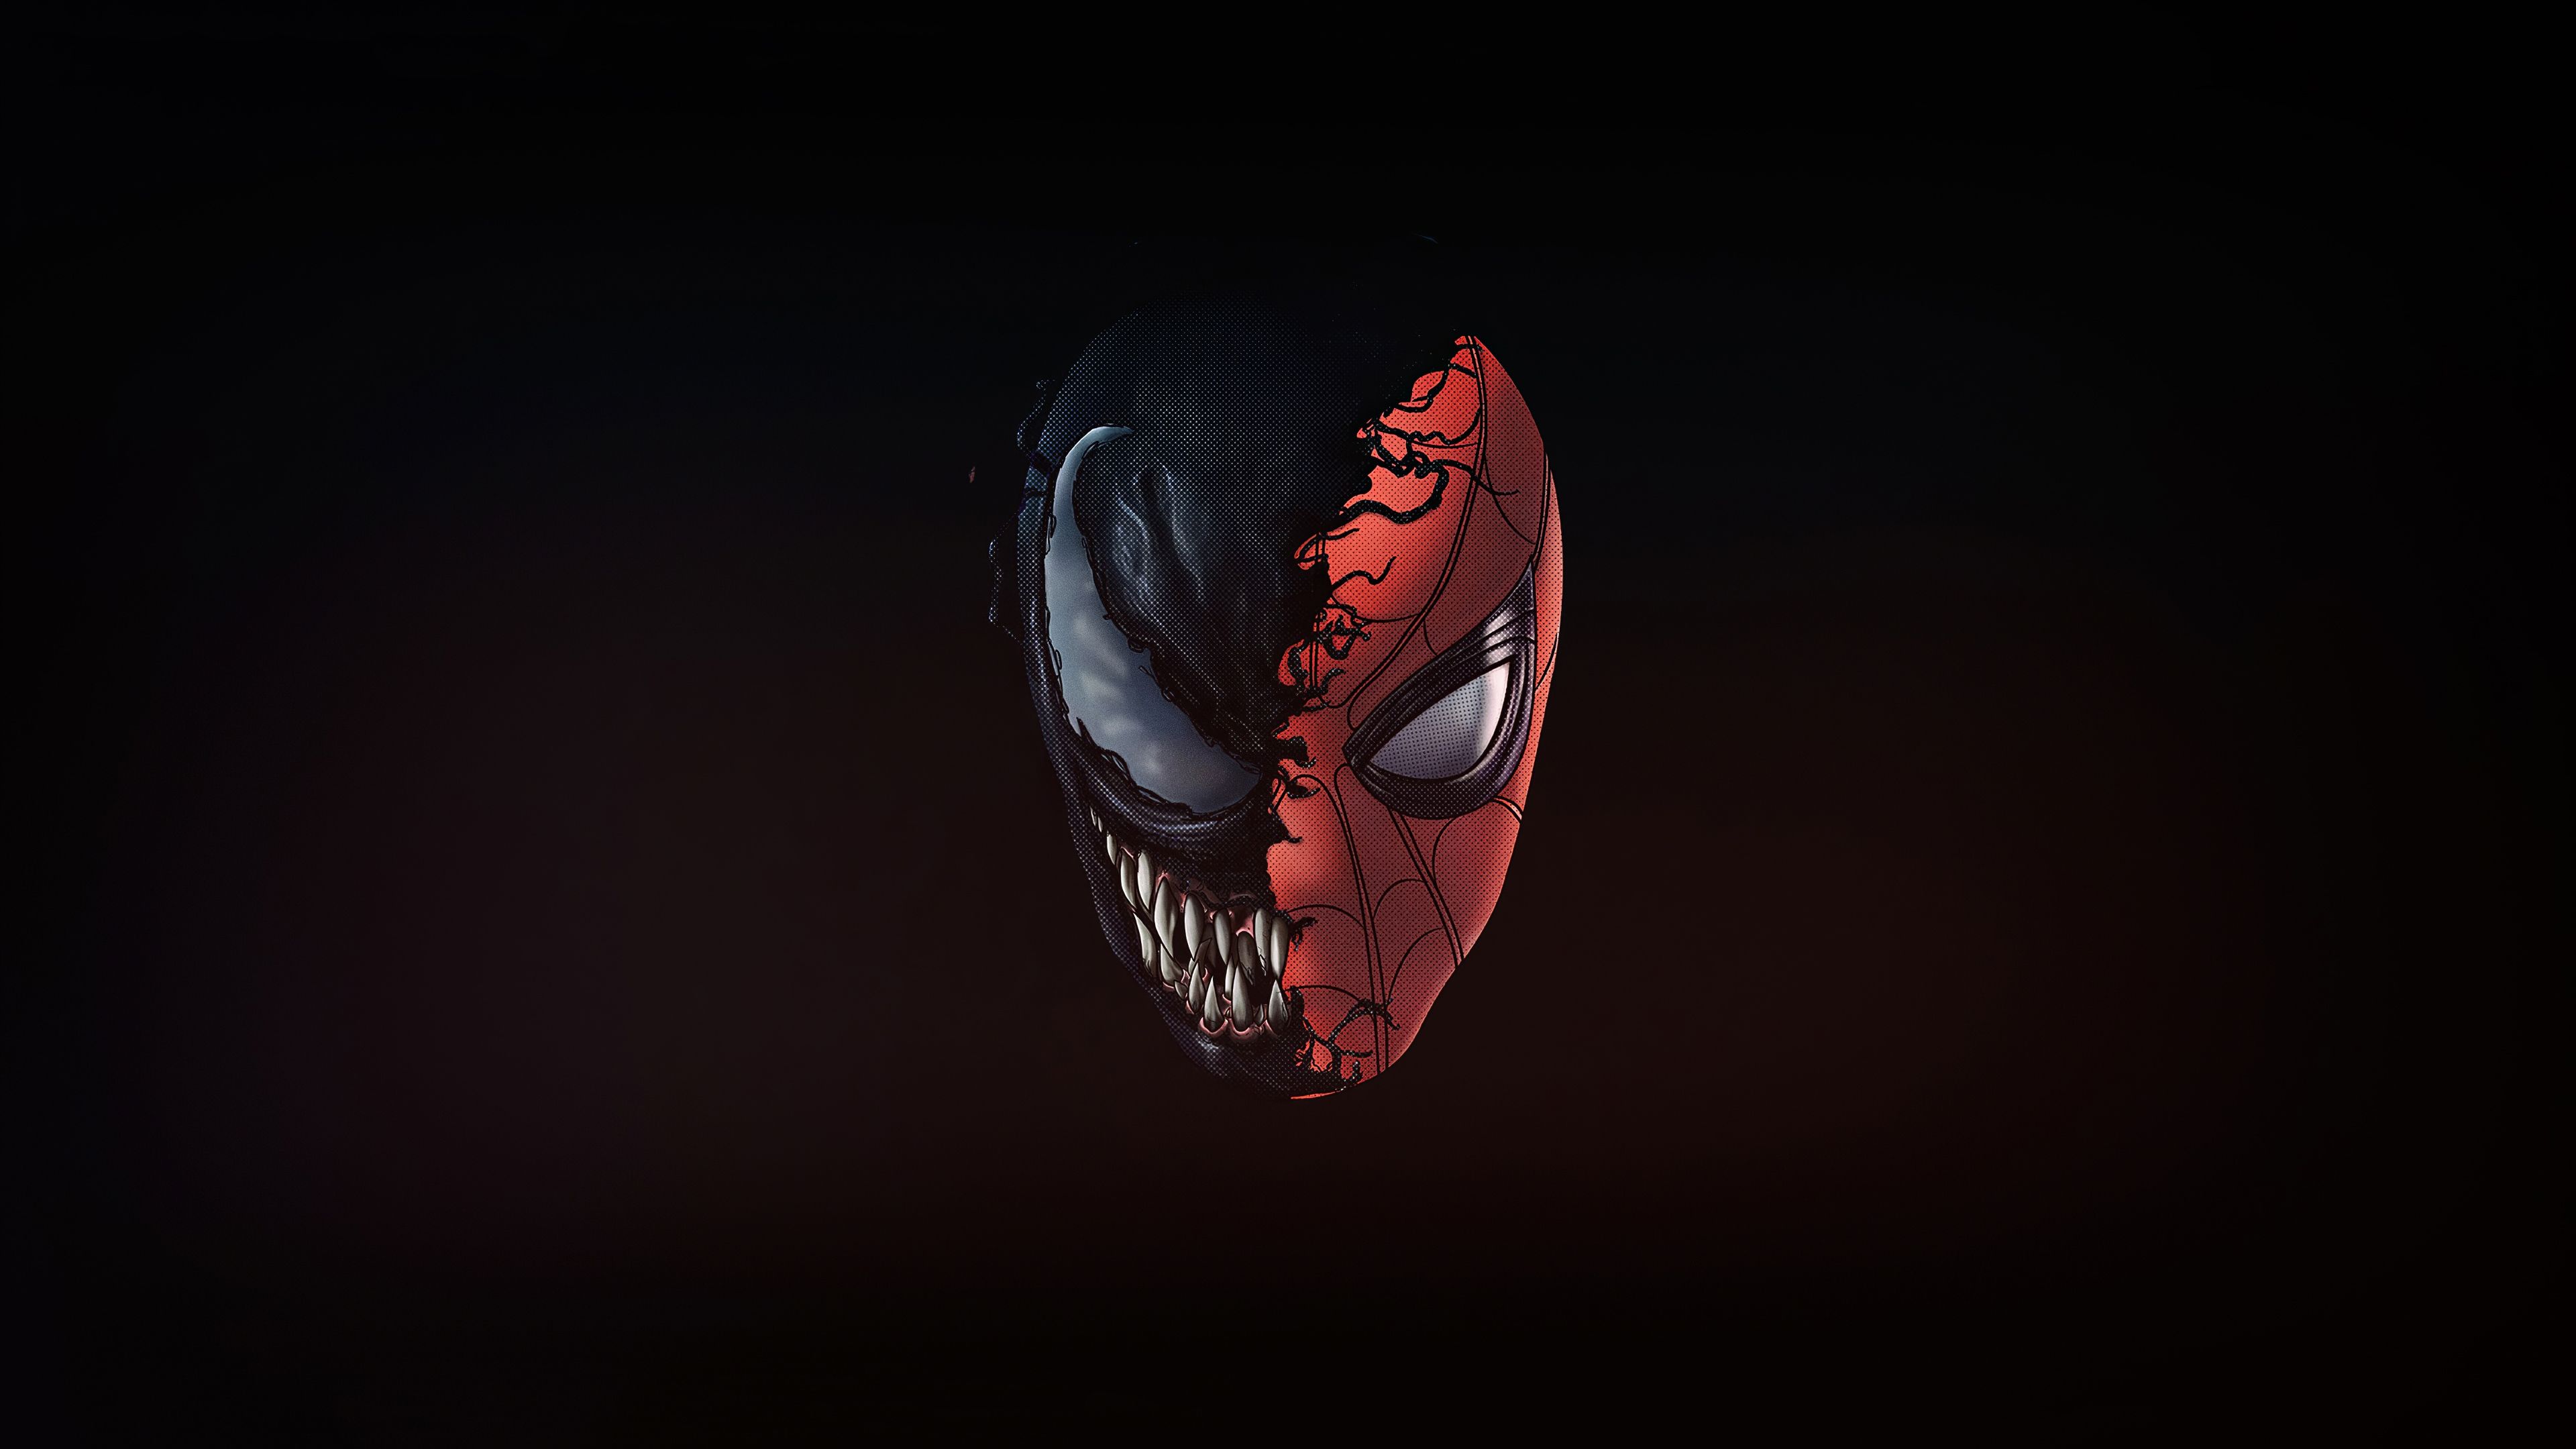 Spider Man and Venom 1440P Resolution Wallpaper, HD Minimalist 4K Wallpaper, Image, Photo and Background